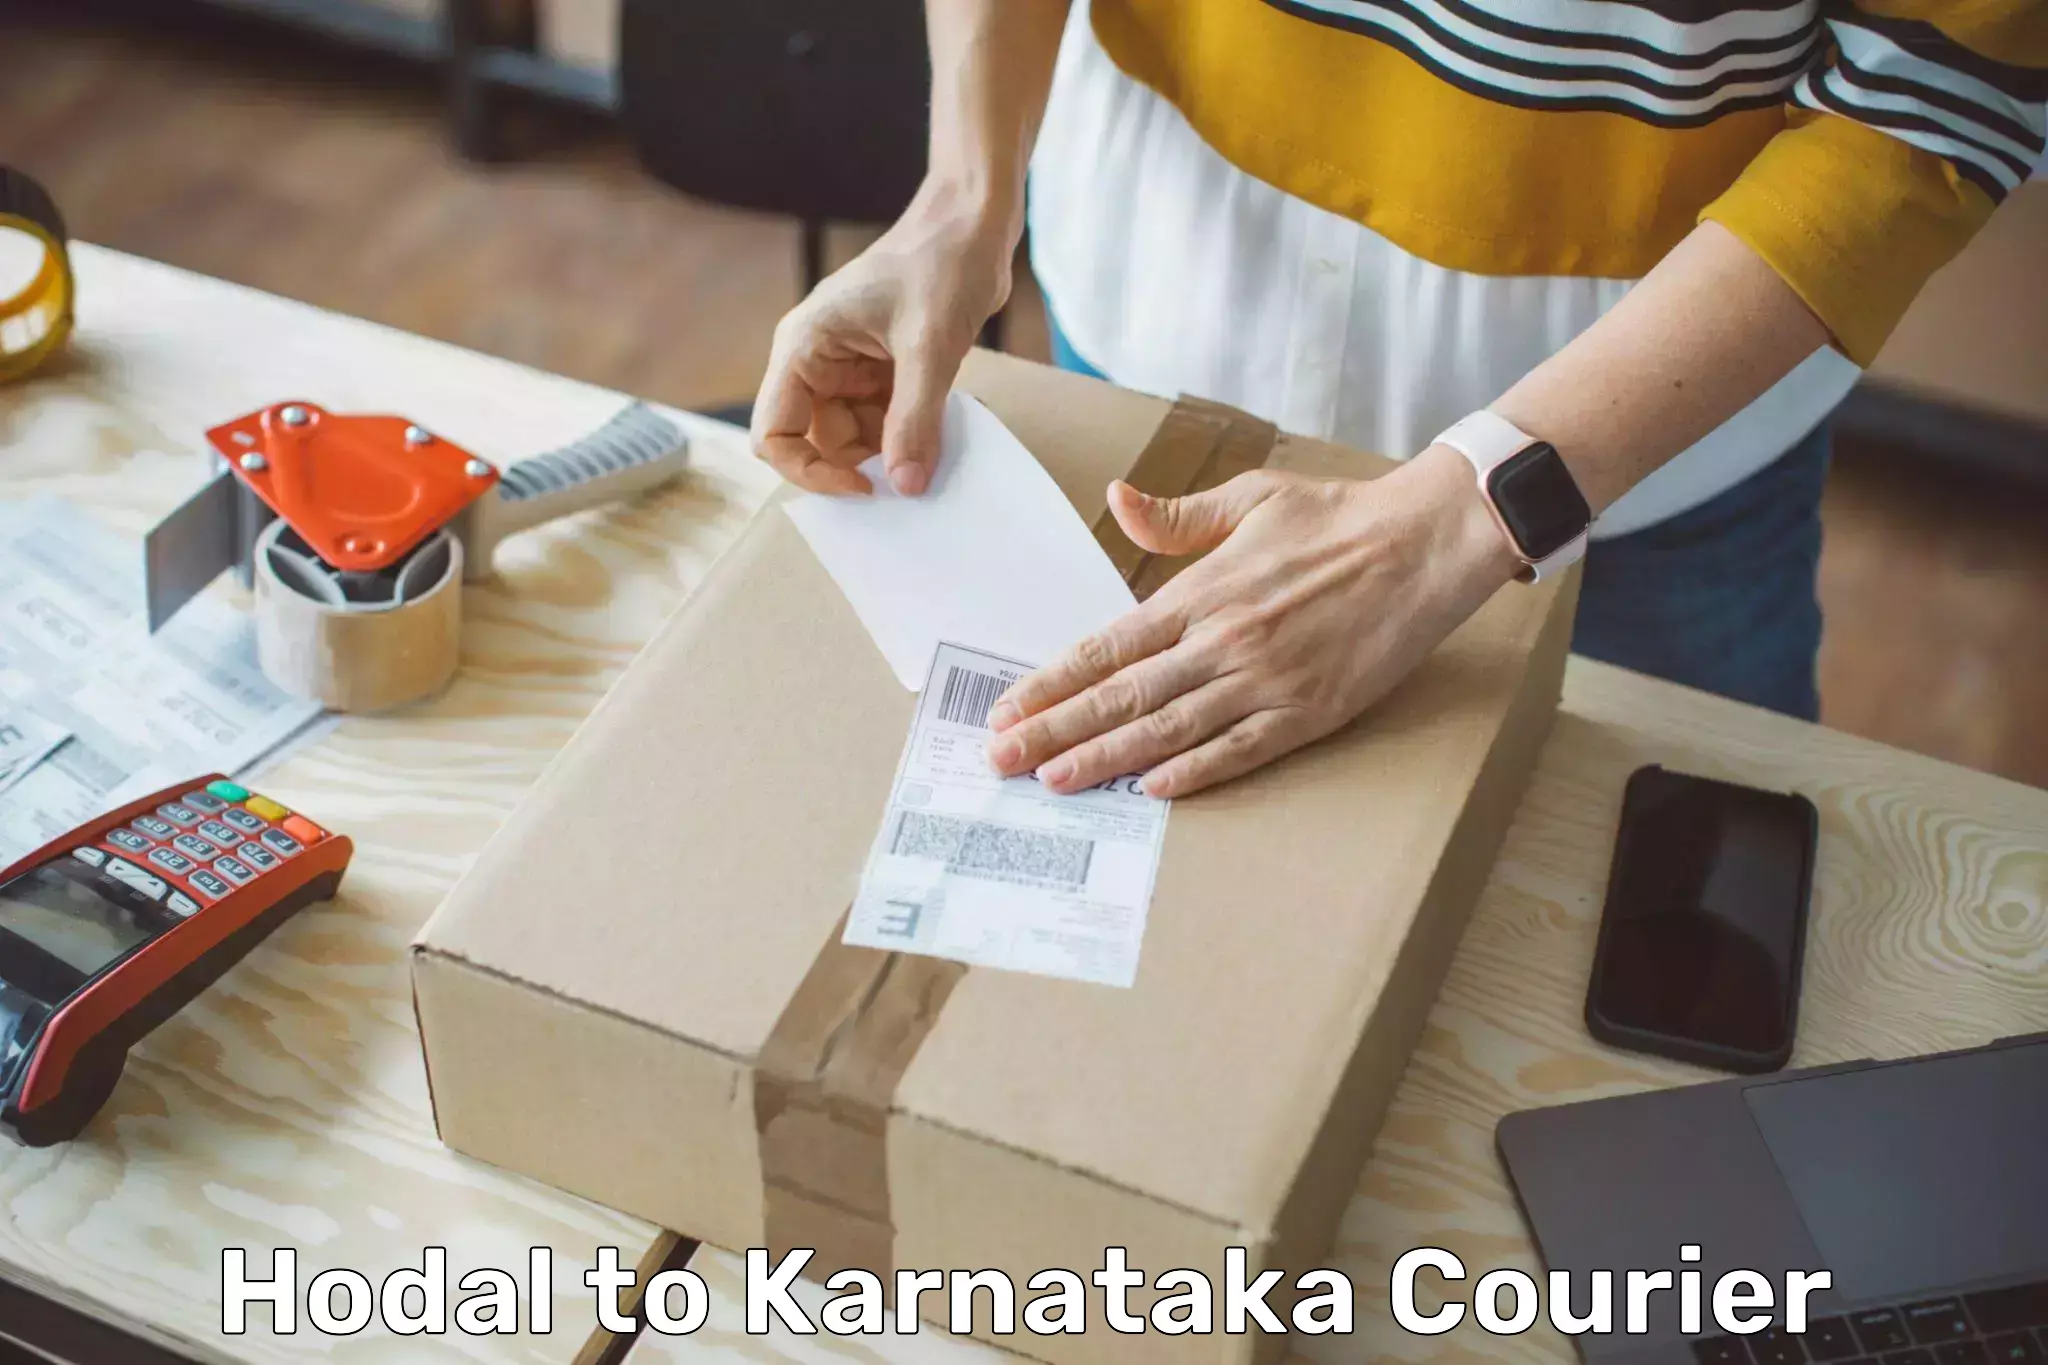 Local delivery service Hodal to Karnataka